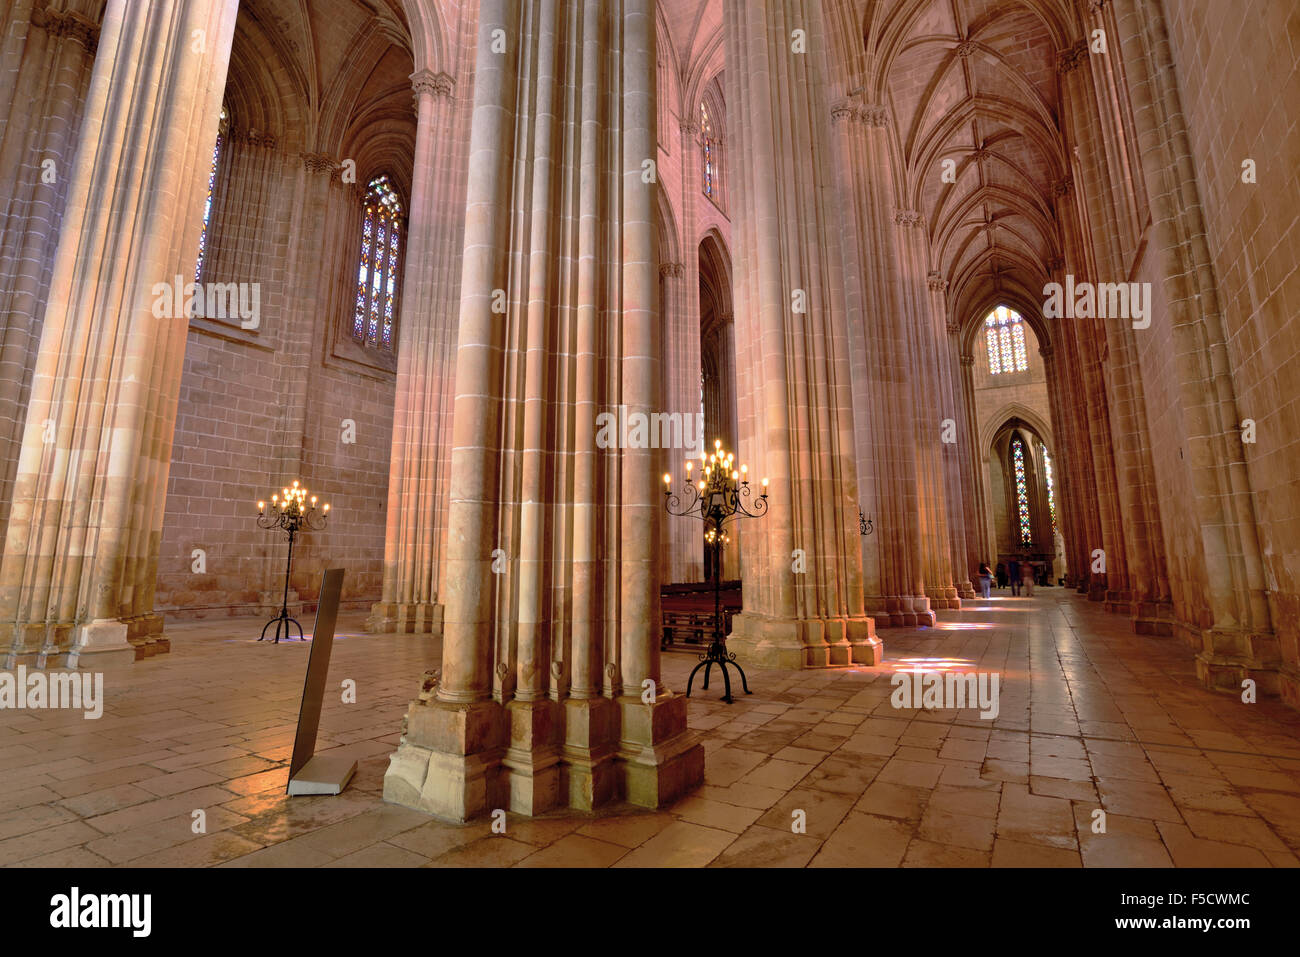 Portugal: Nave with gothic columns in the church Santa Maria da Vitoria in Batalha Monastery Stock Photo